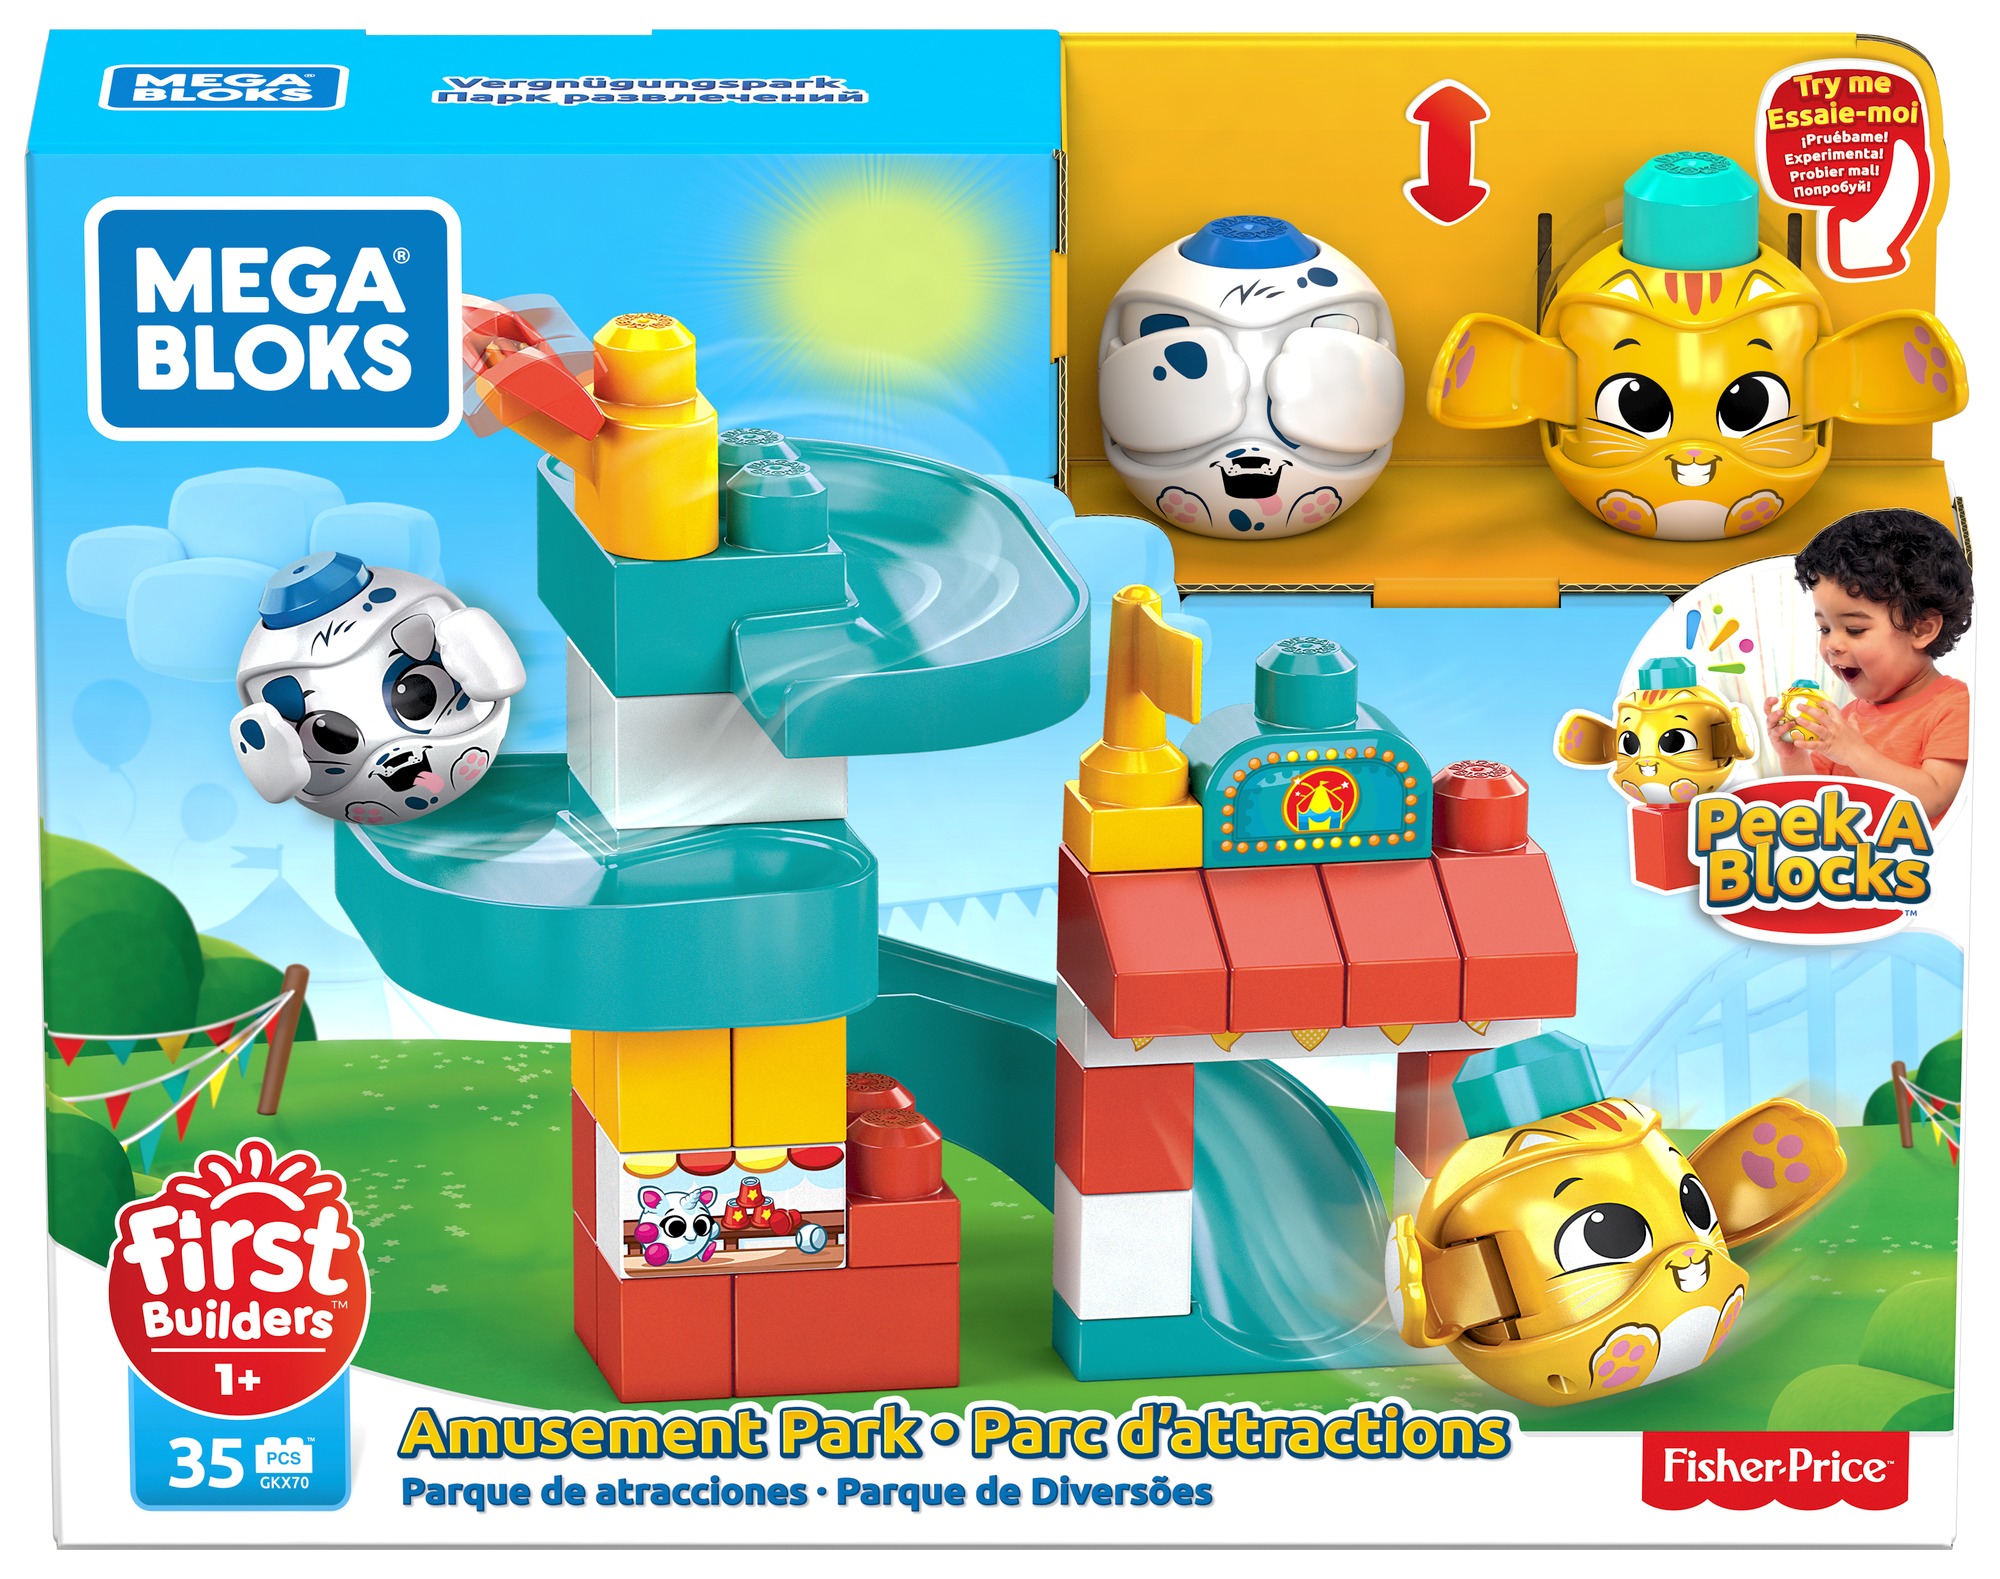 Mega Bloks Peek A Blocks Amusement Park with Big Building Blocks, Building Toys for Toddlers (35 Pieces) - image 4 of 7